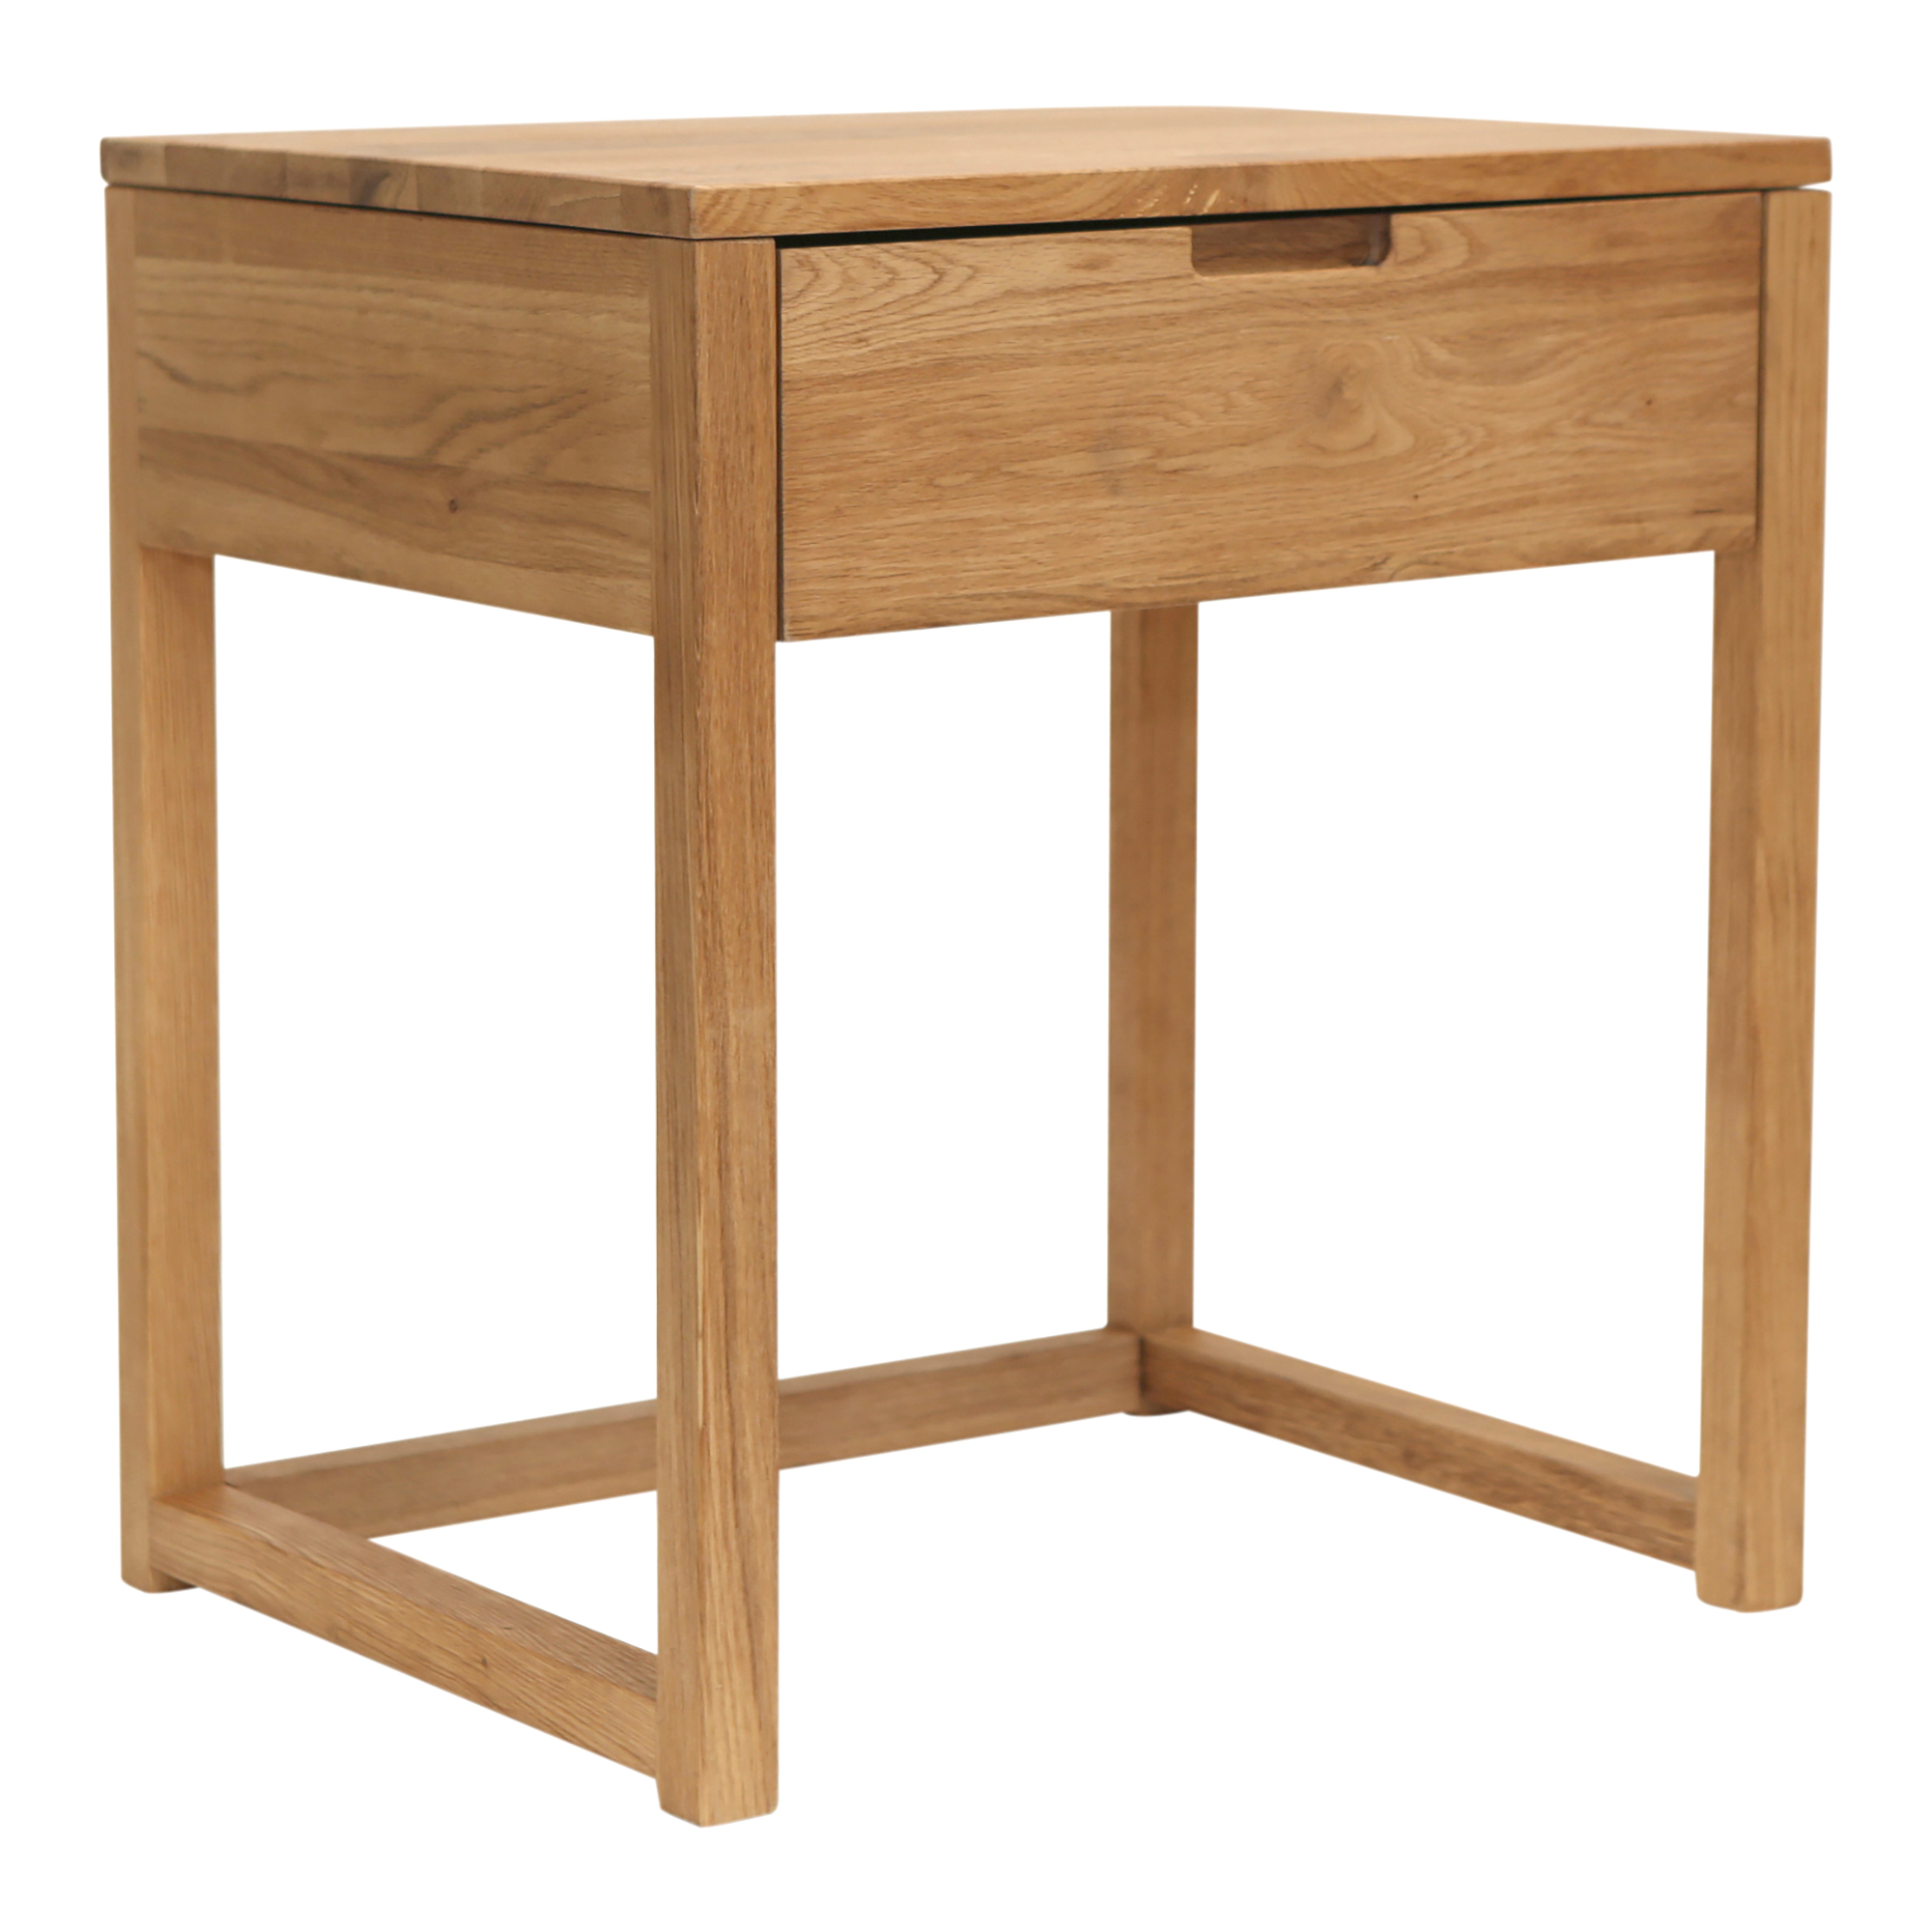 Webster Olwen Oak Wood Bedside Table, Round Bedside Table With Drawers Australia